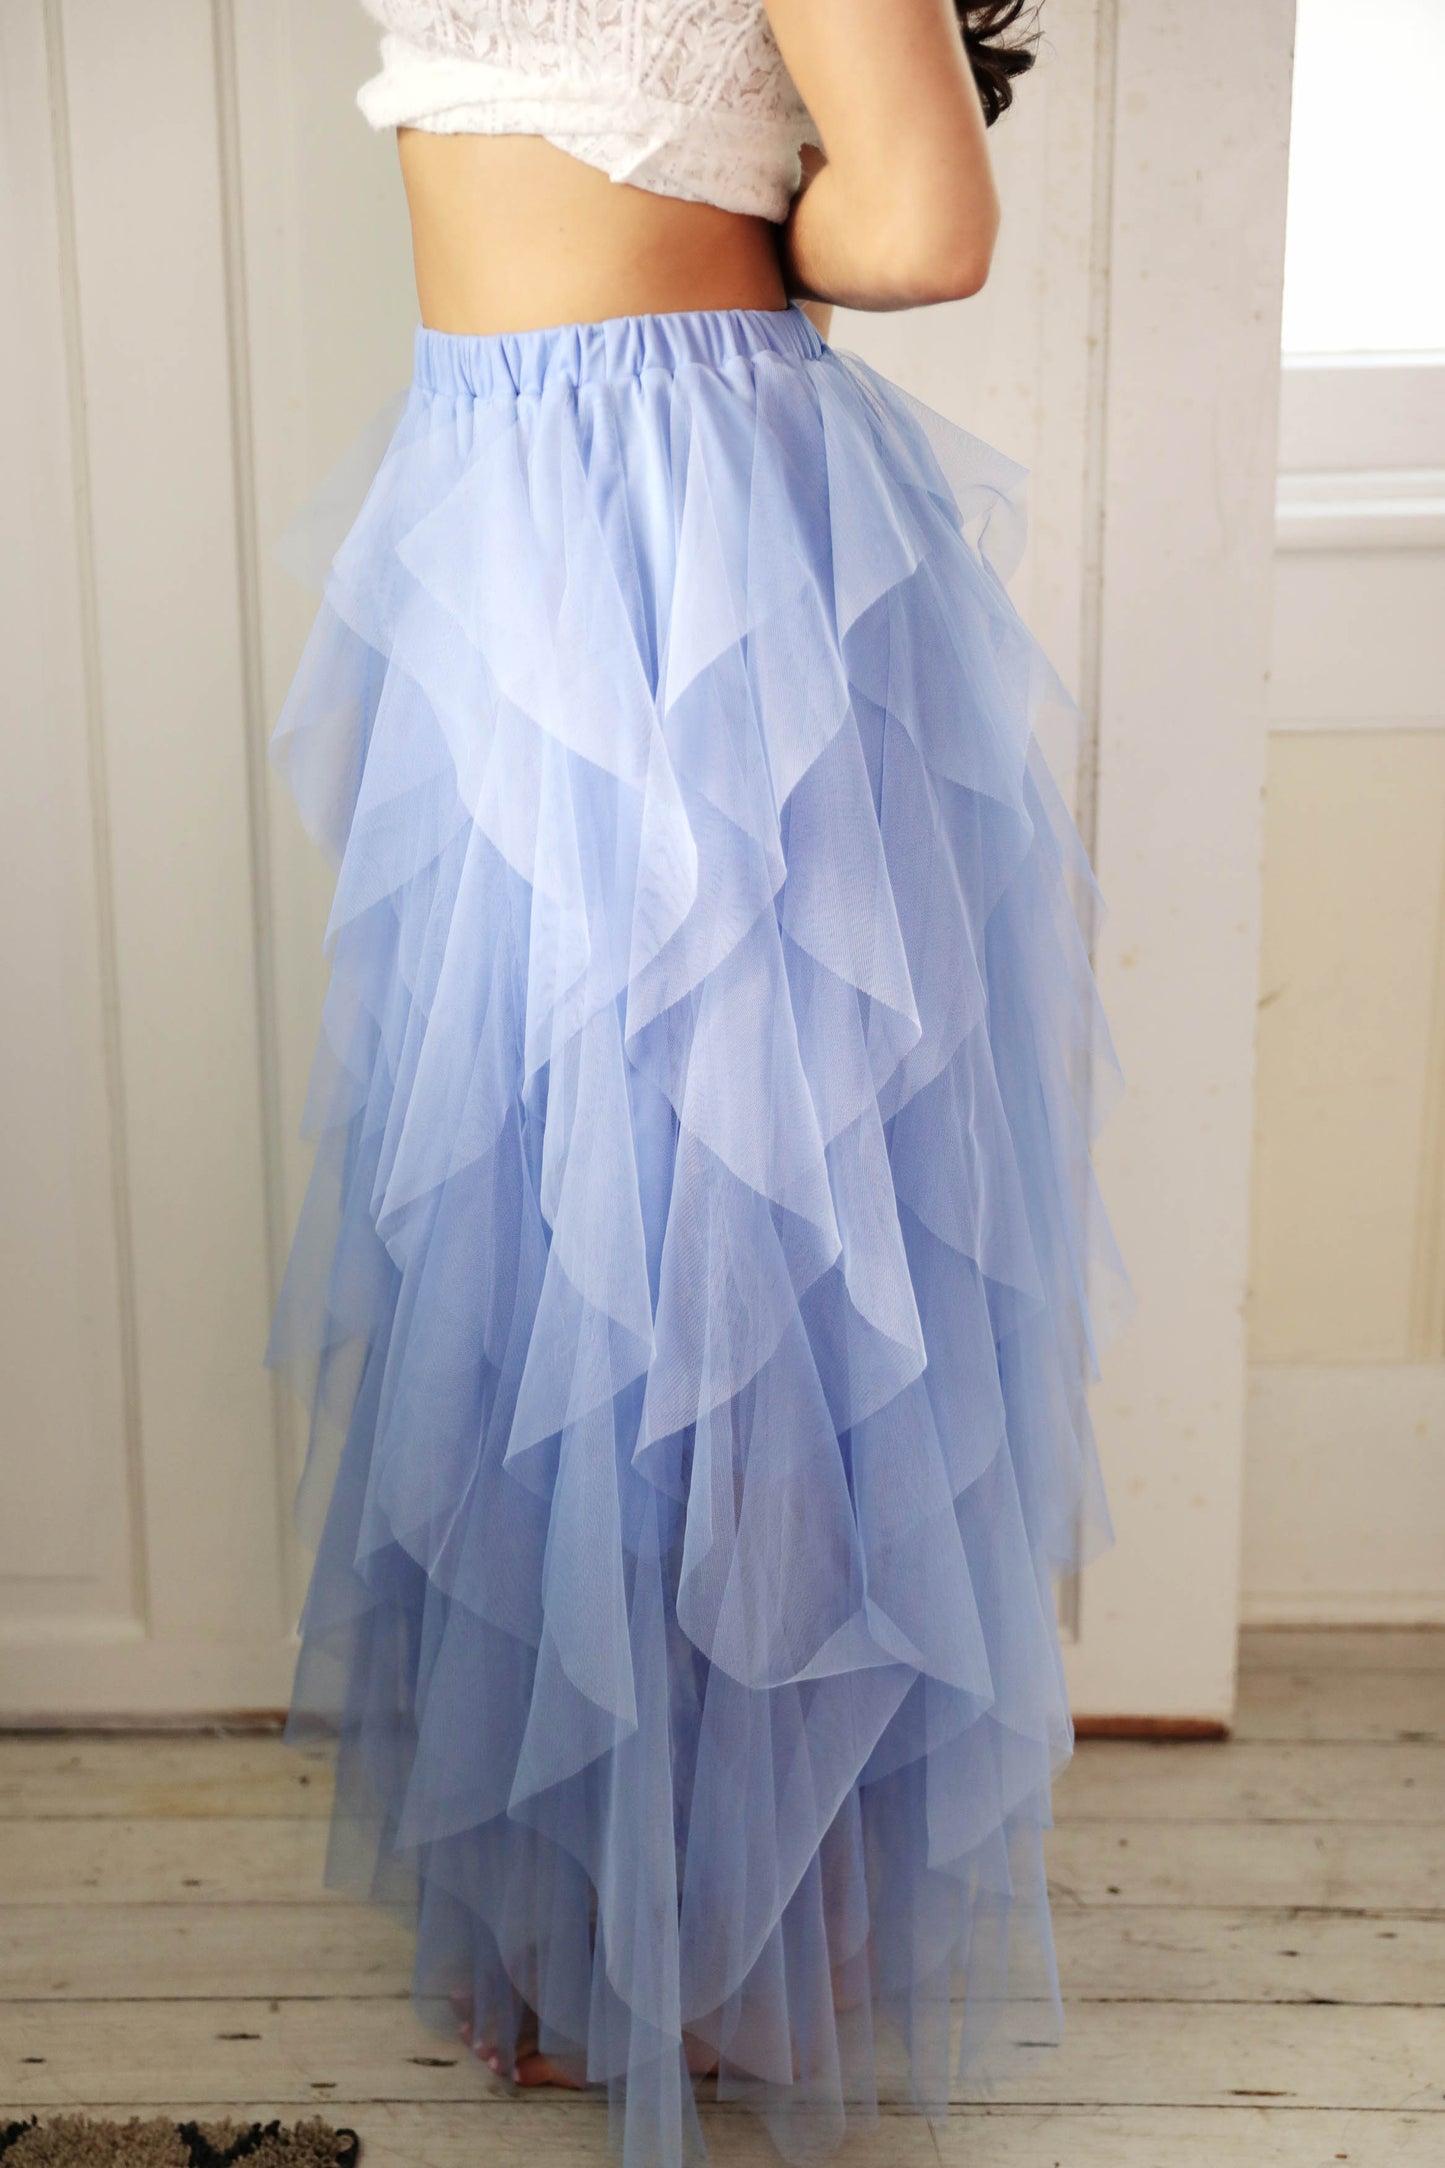 Royalty Ruffle Skirt in Blue